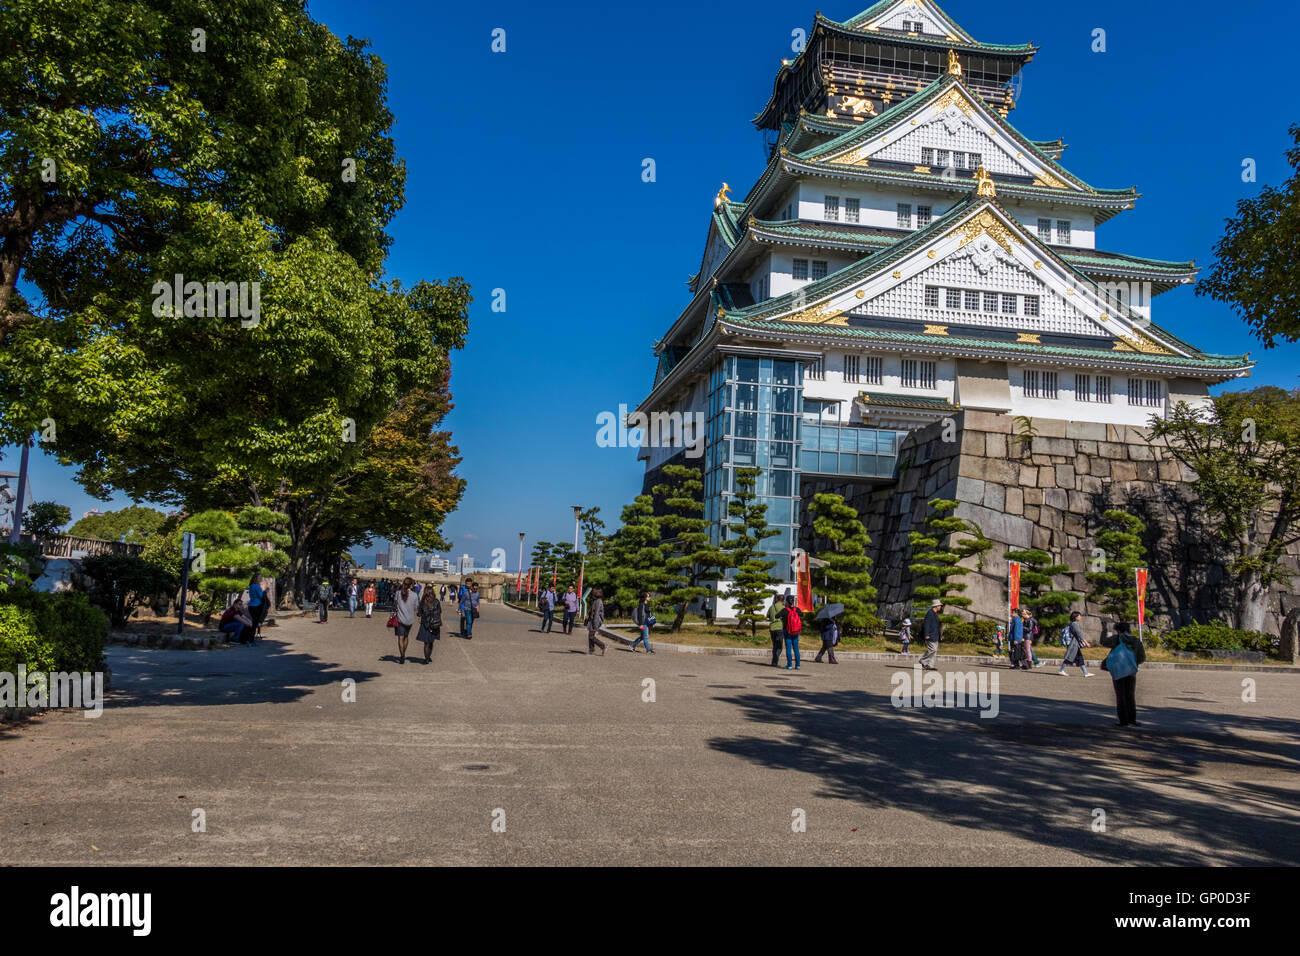 El Castillo de Osaka en el Castillo de Osaka,Parque Osaka Japón Foto de stock